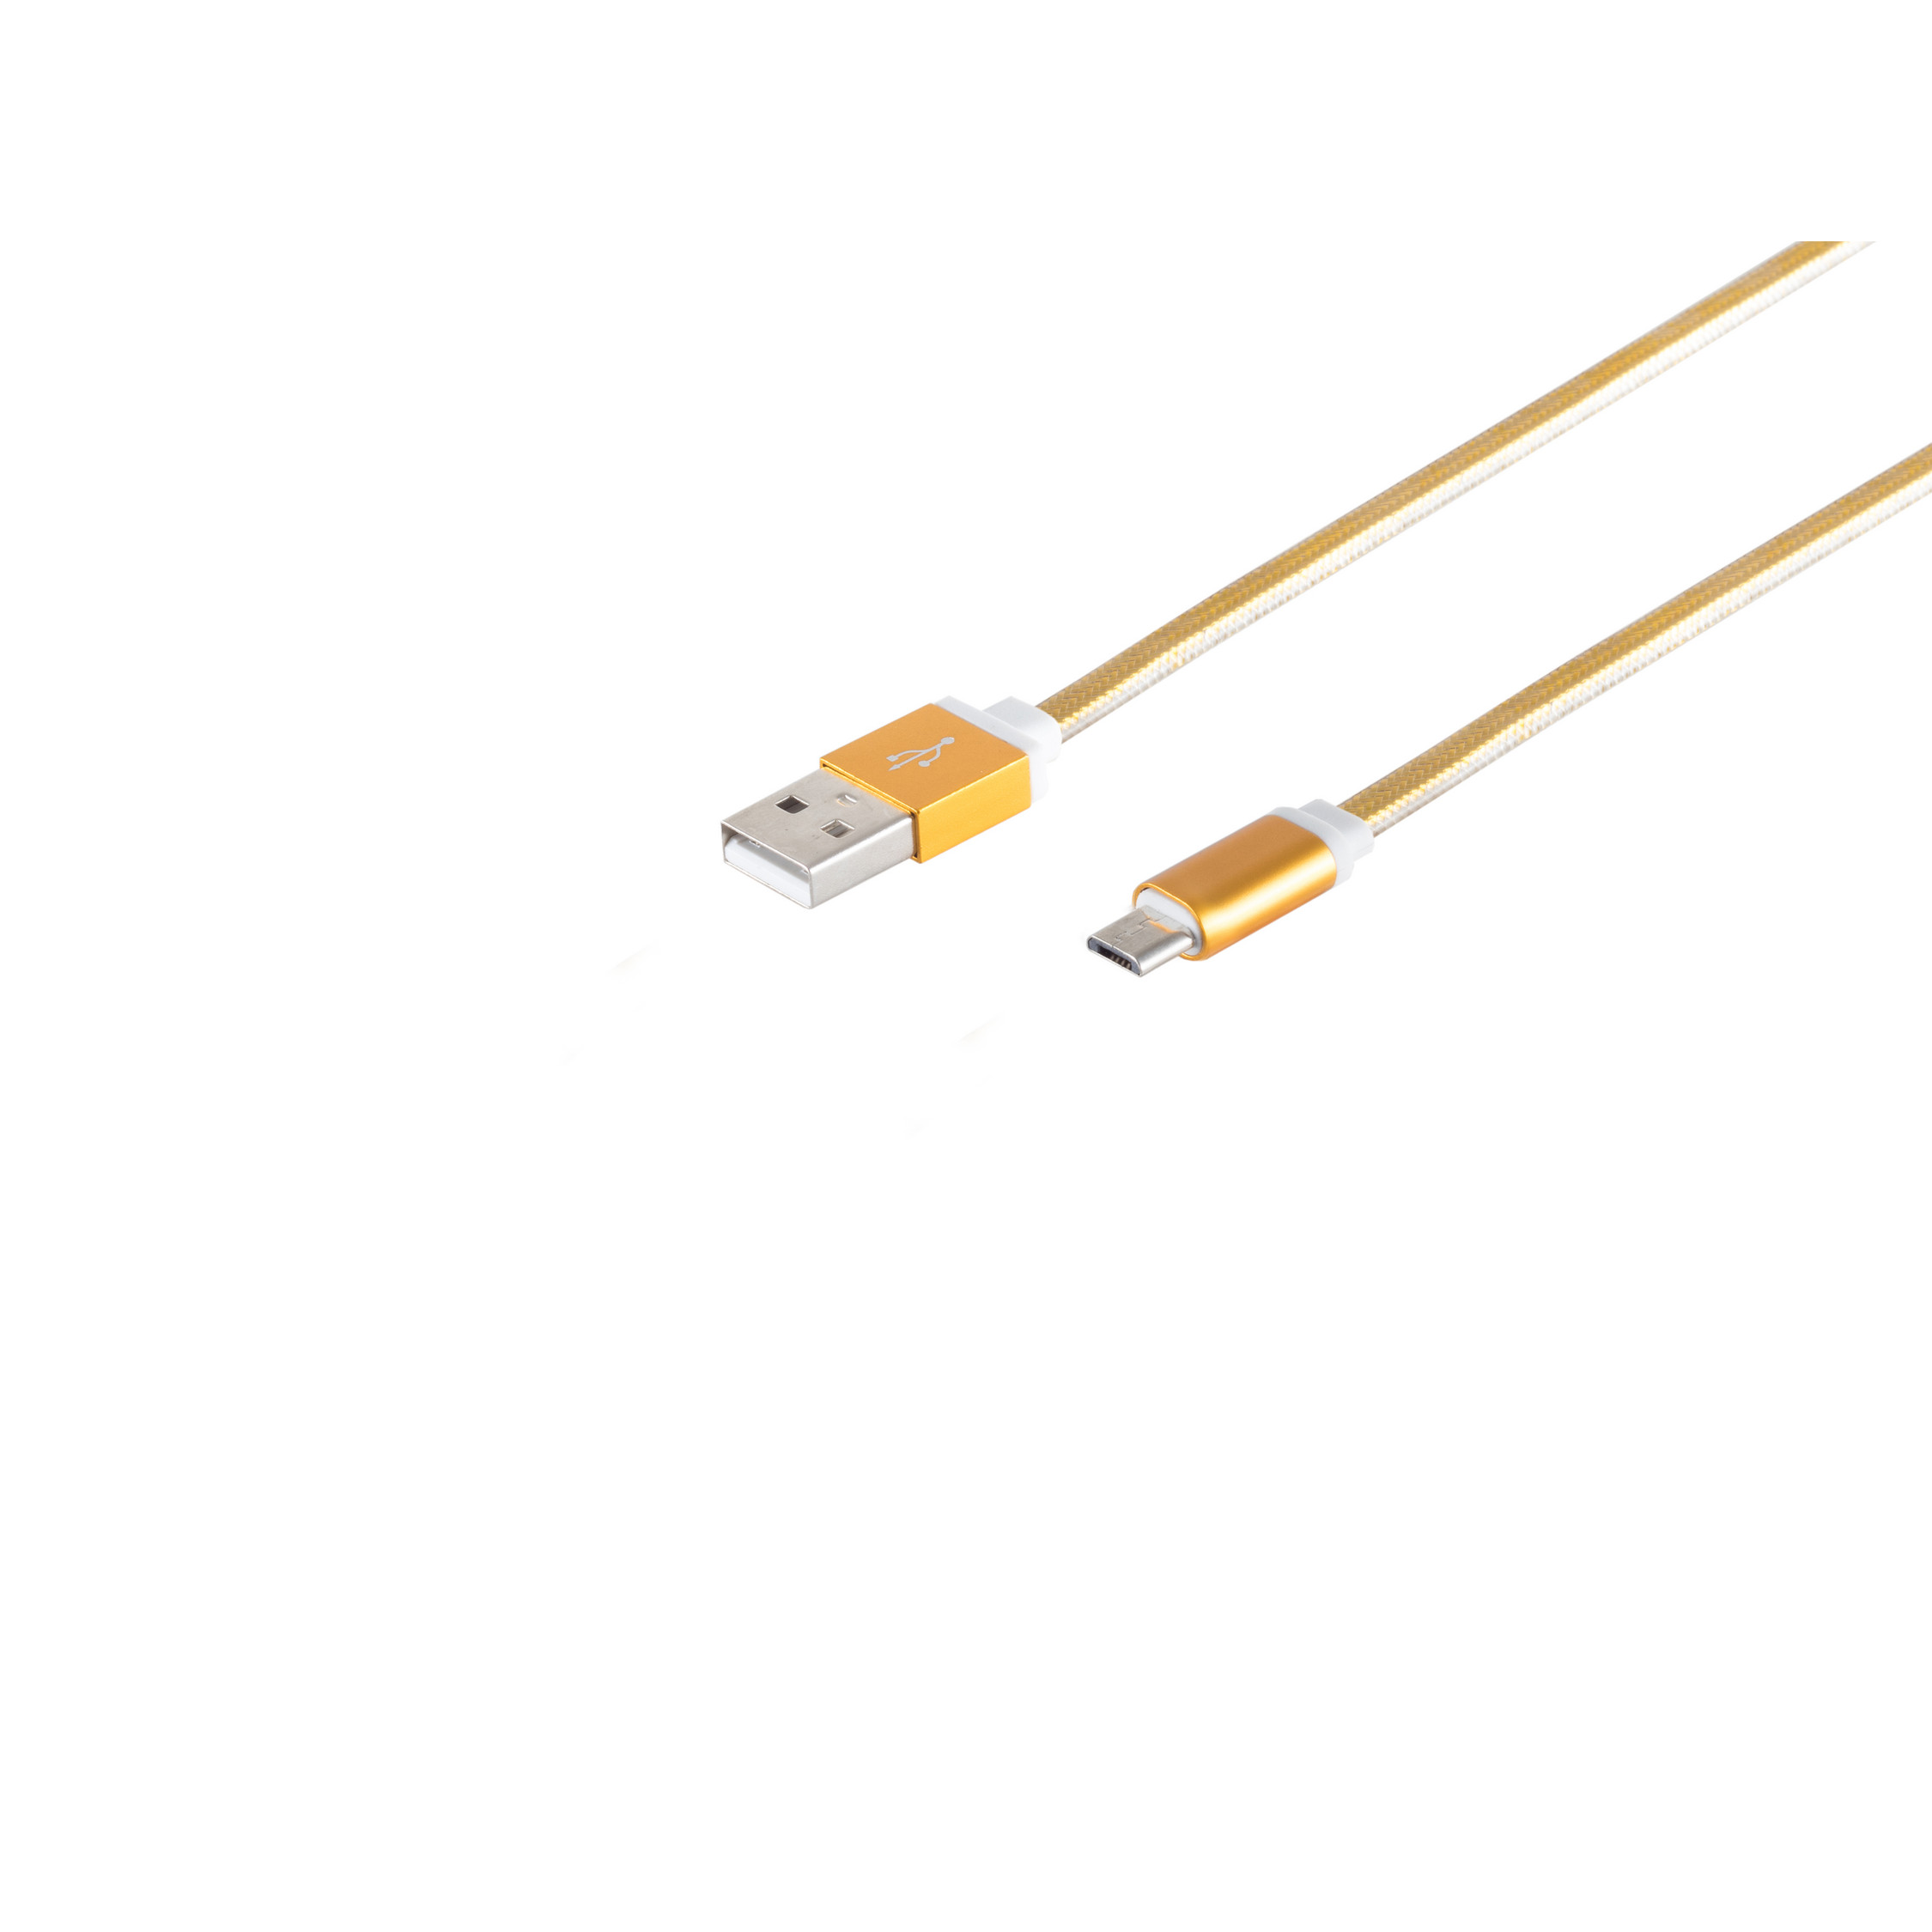 MAXIMUM USB USB 0,3m CONNECTIVITY gold Ladekabel Stecker USB-Ladekabel auf S/CONN Micro B A